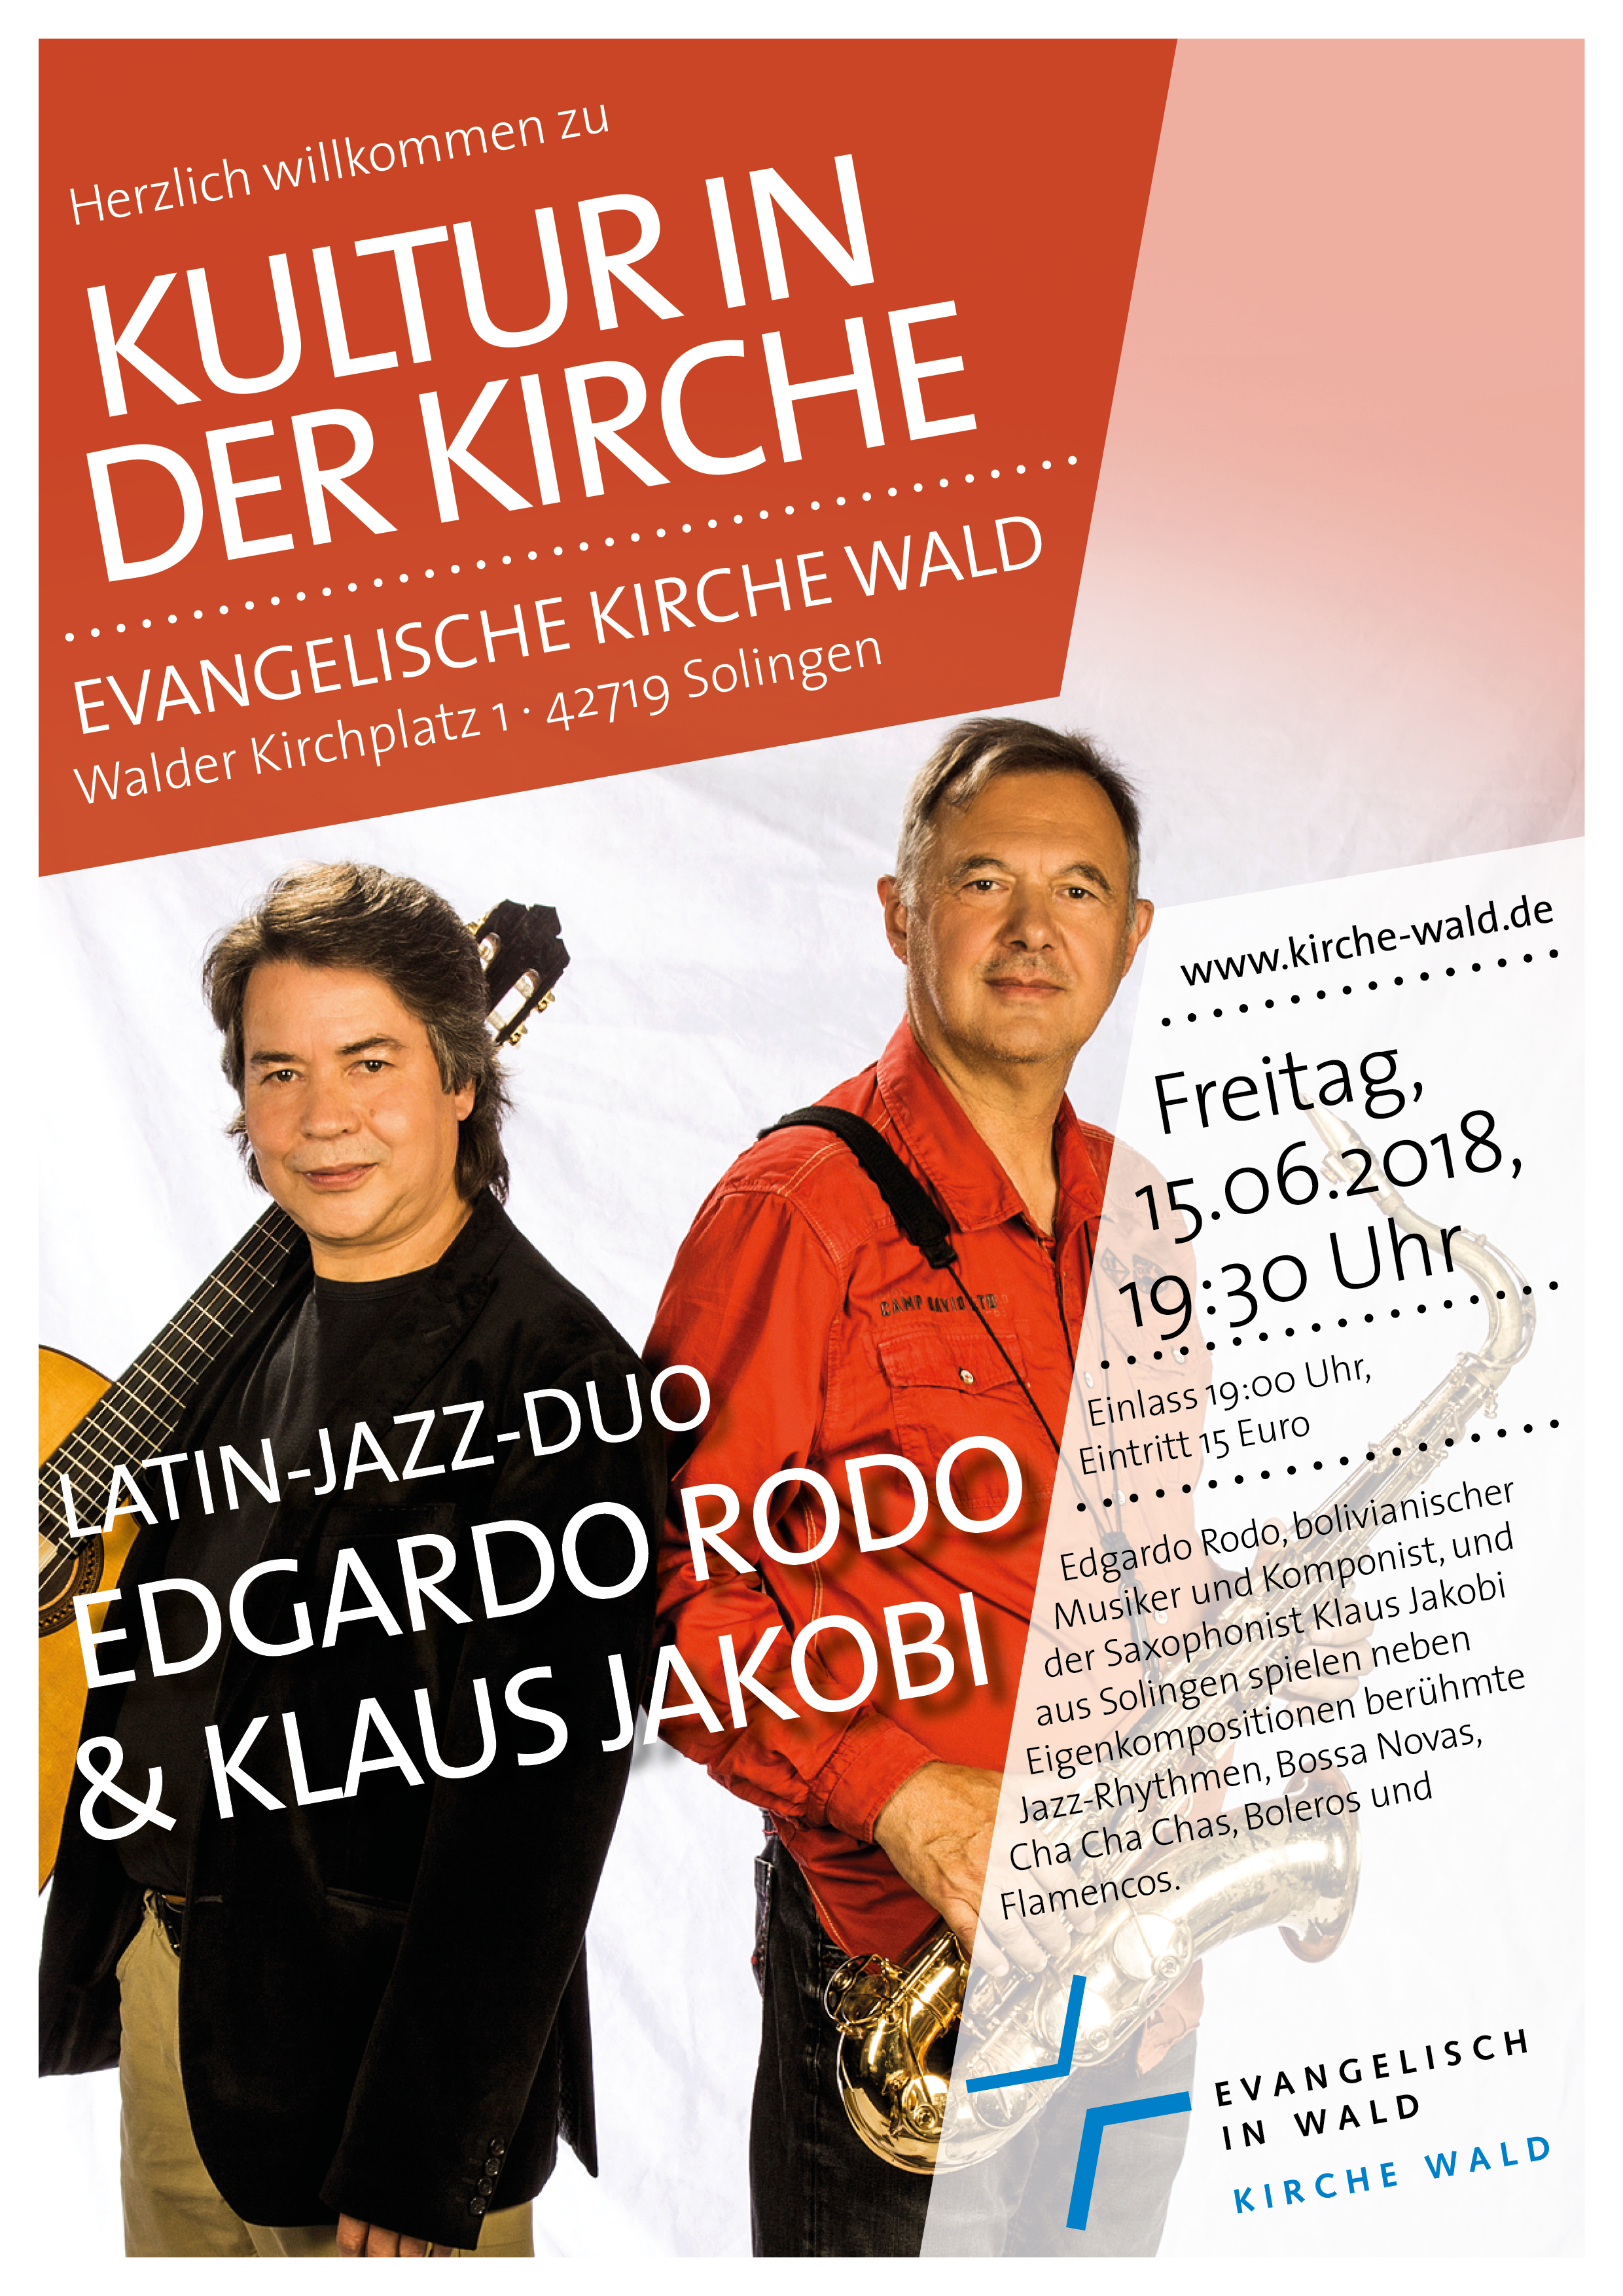 Kultur in der Kirche Edgardo Rodo & Klaus Jakobi Latin-Jazz-Duo